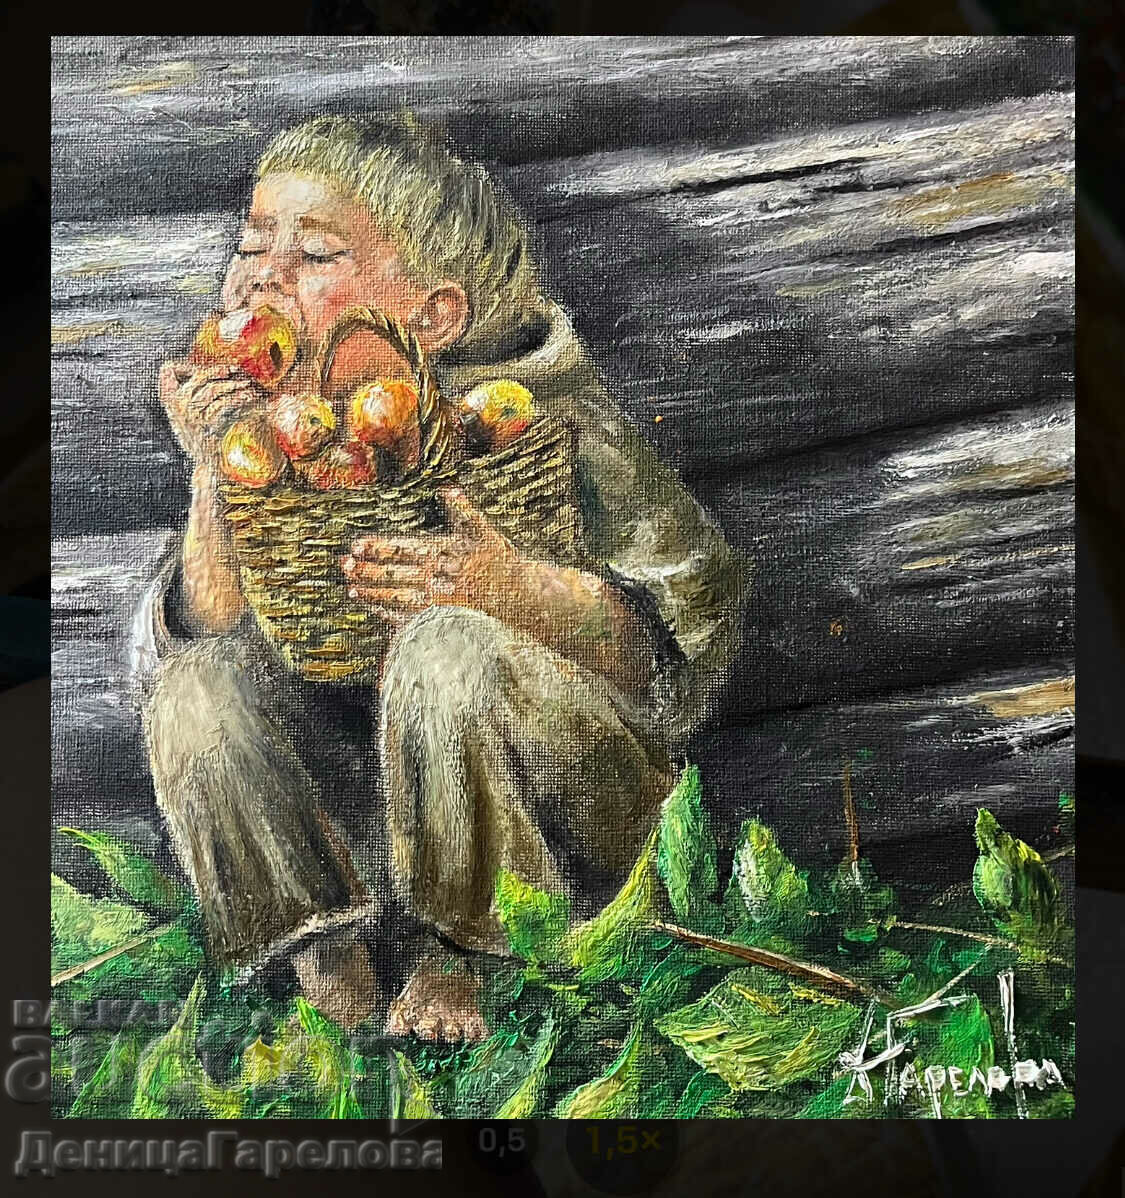 Denitsa Garelova painting "The Apple Thief" 30/30 oil